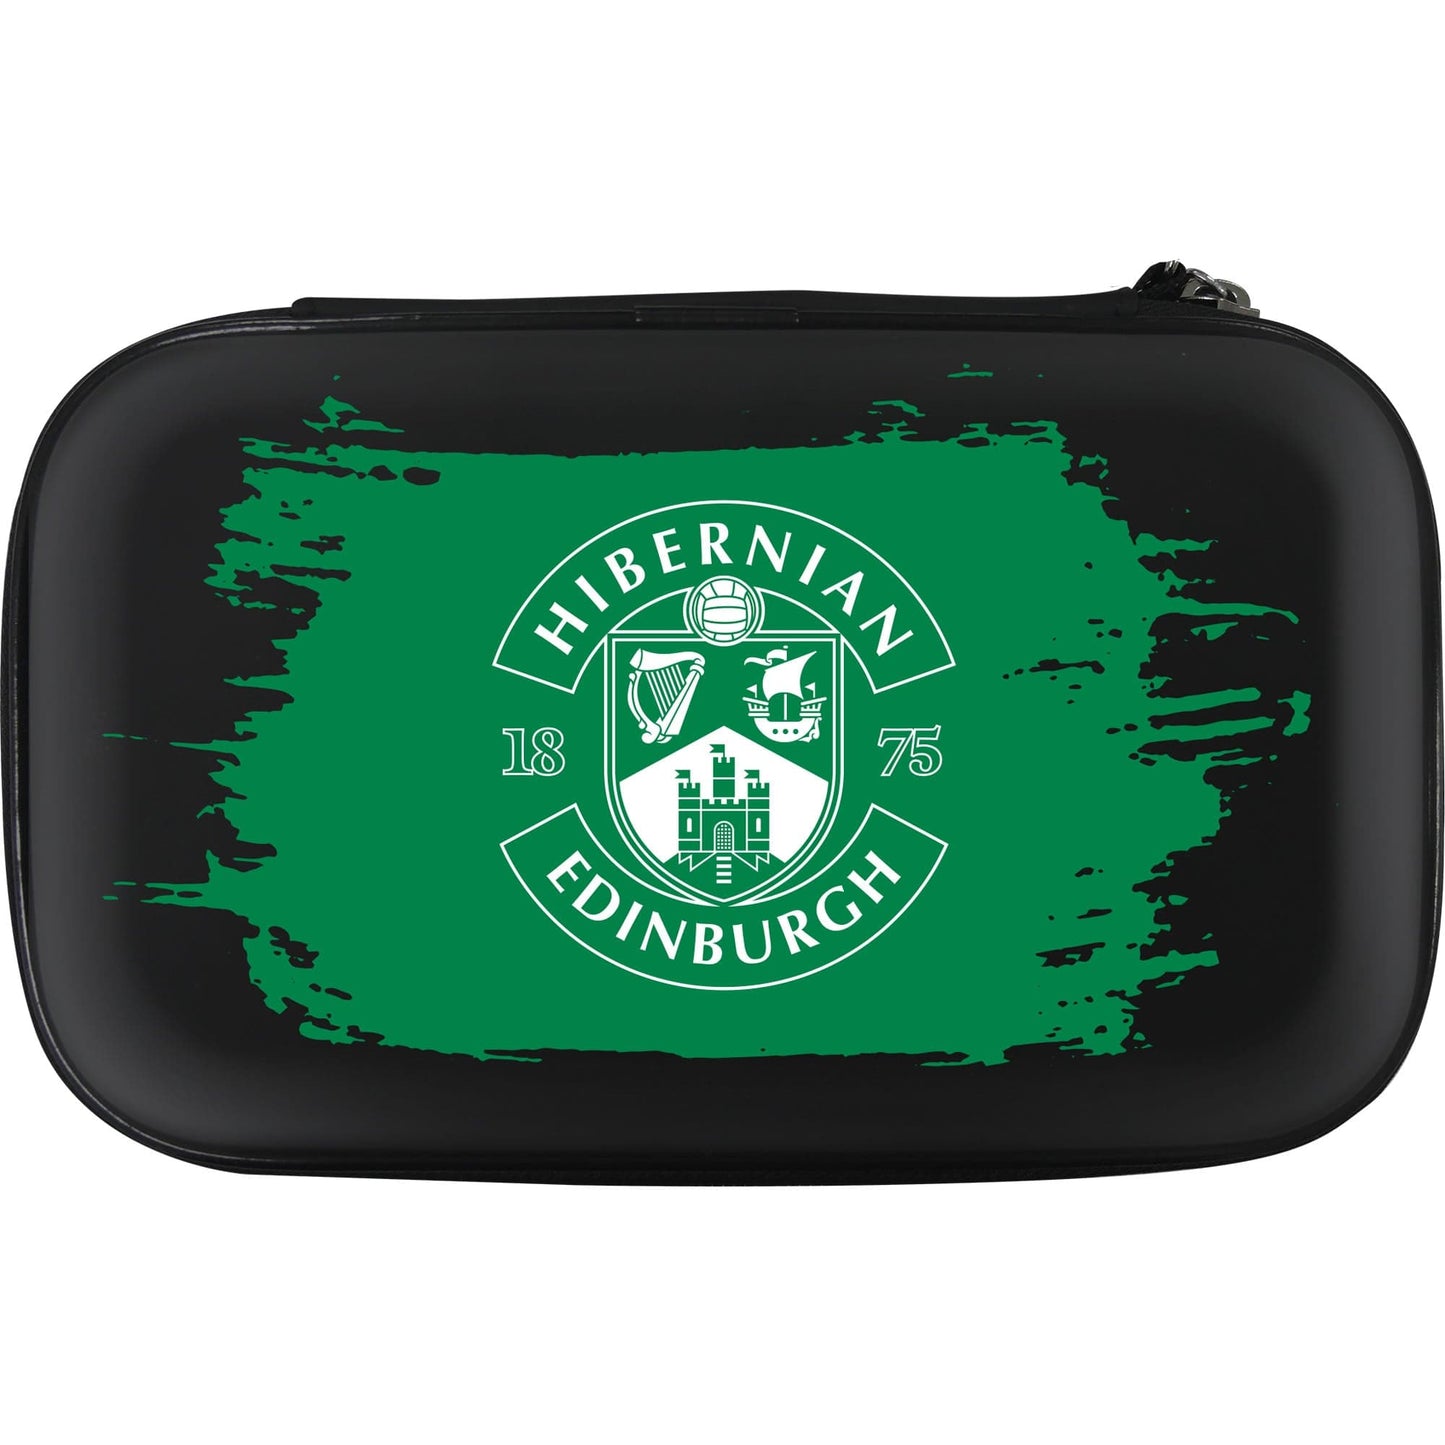 Hibernian FC - Official Licensed - Dart Case - W2 - Green Crest